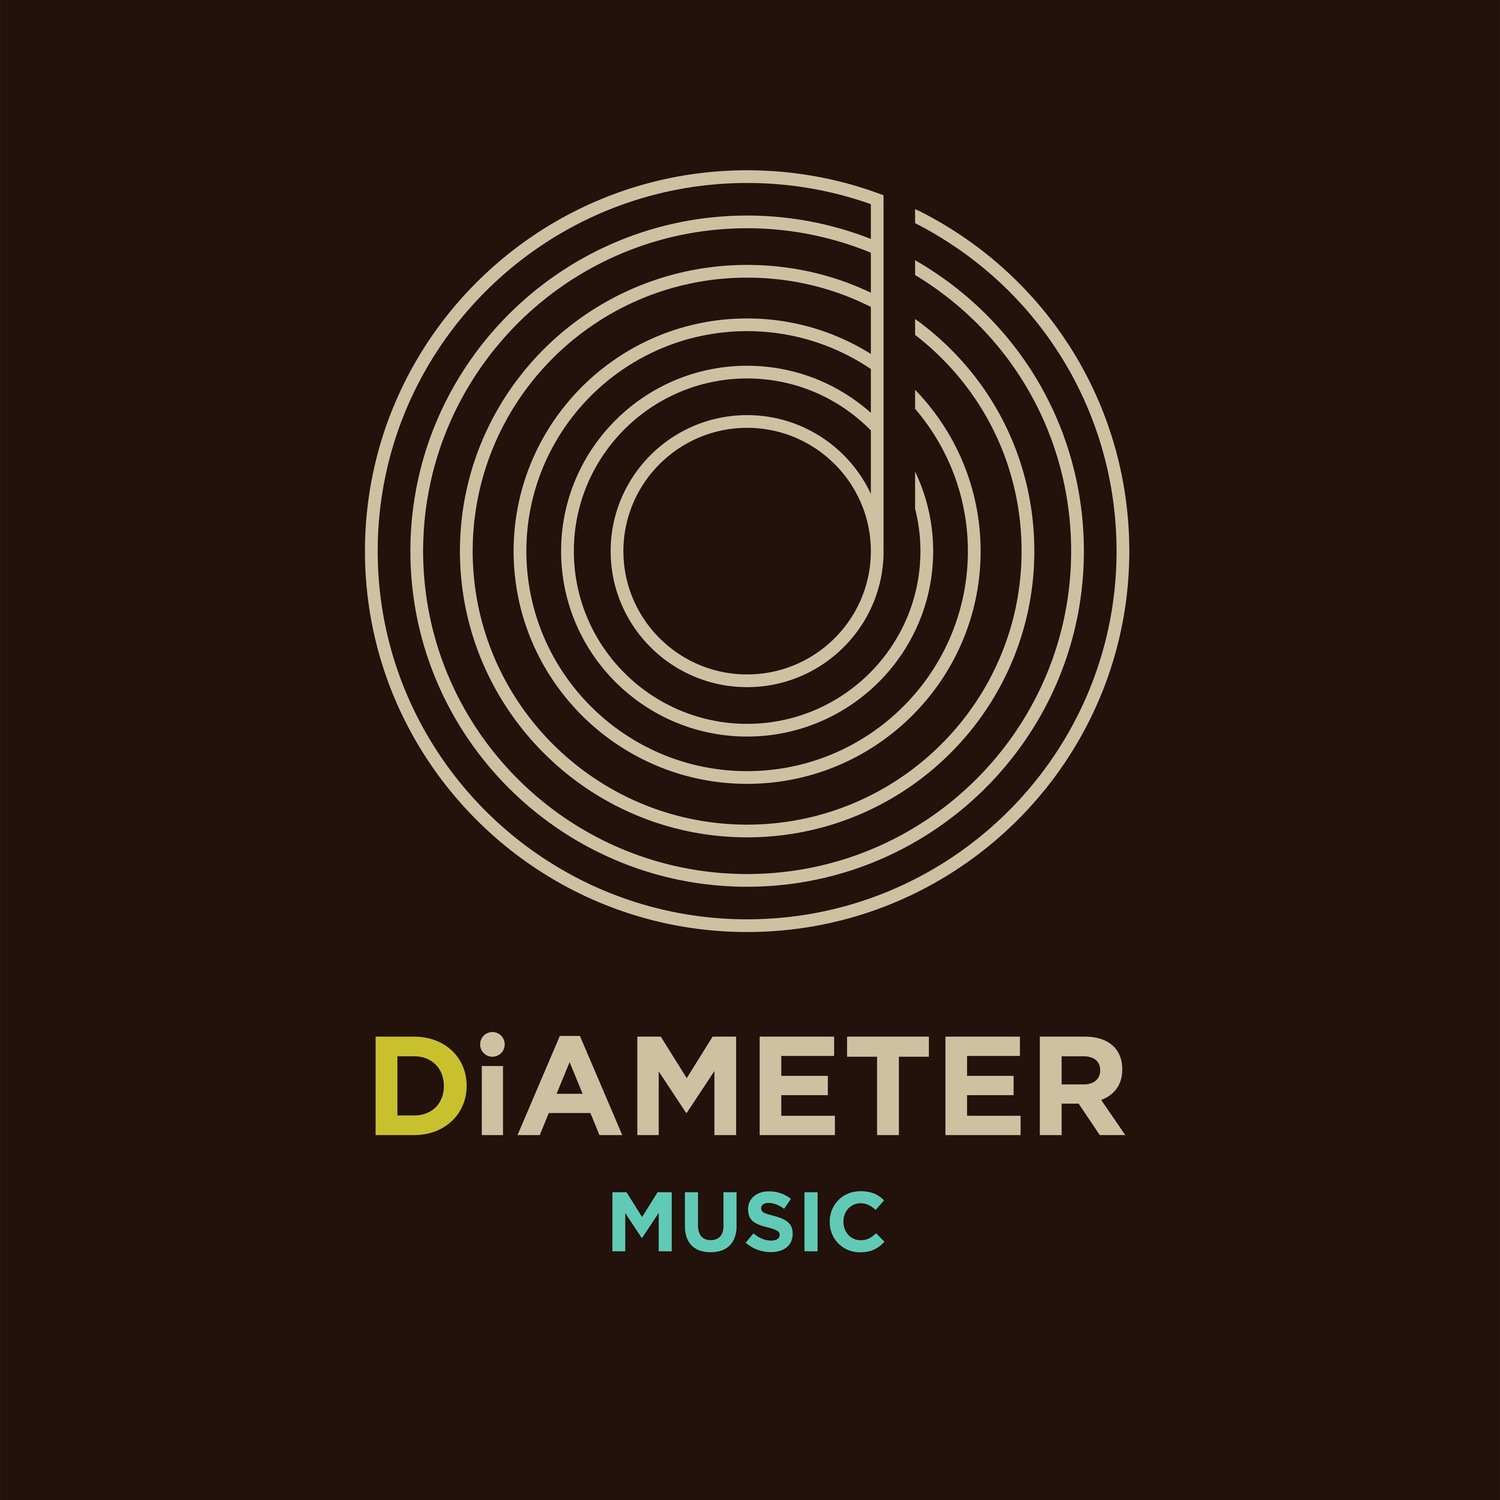 DiAMETER MUSIC, LLC